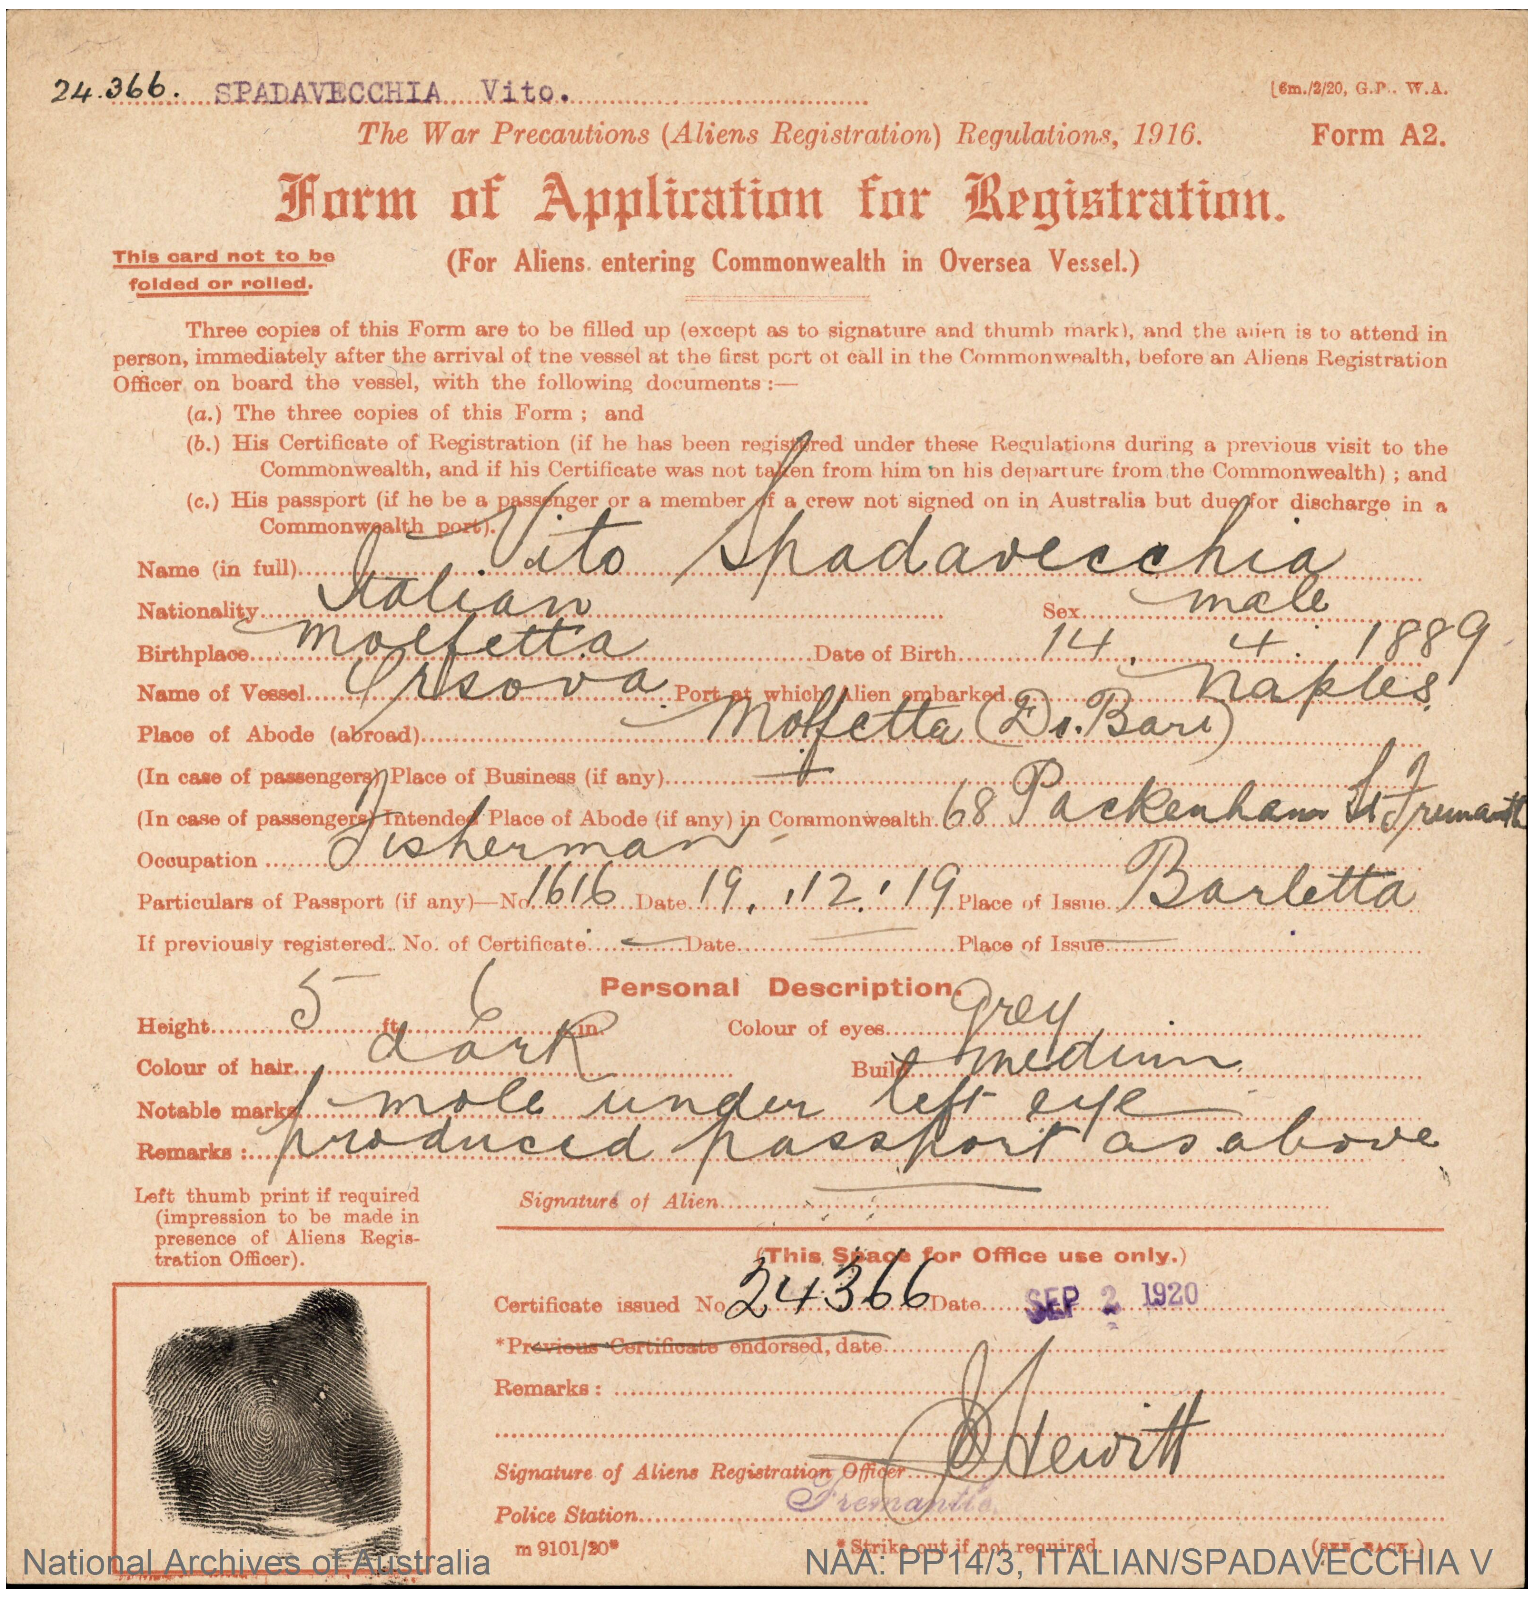 Vito Spadavecchia's Alien Registration Papers